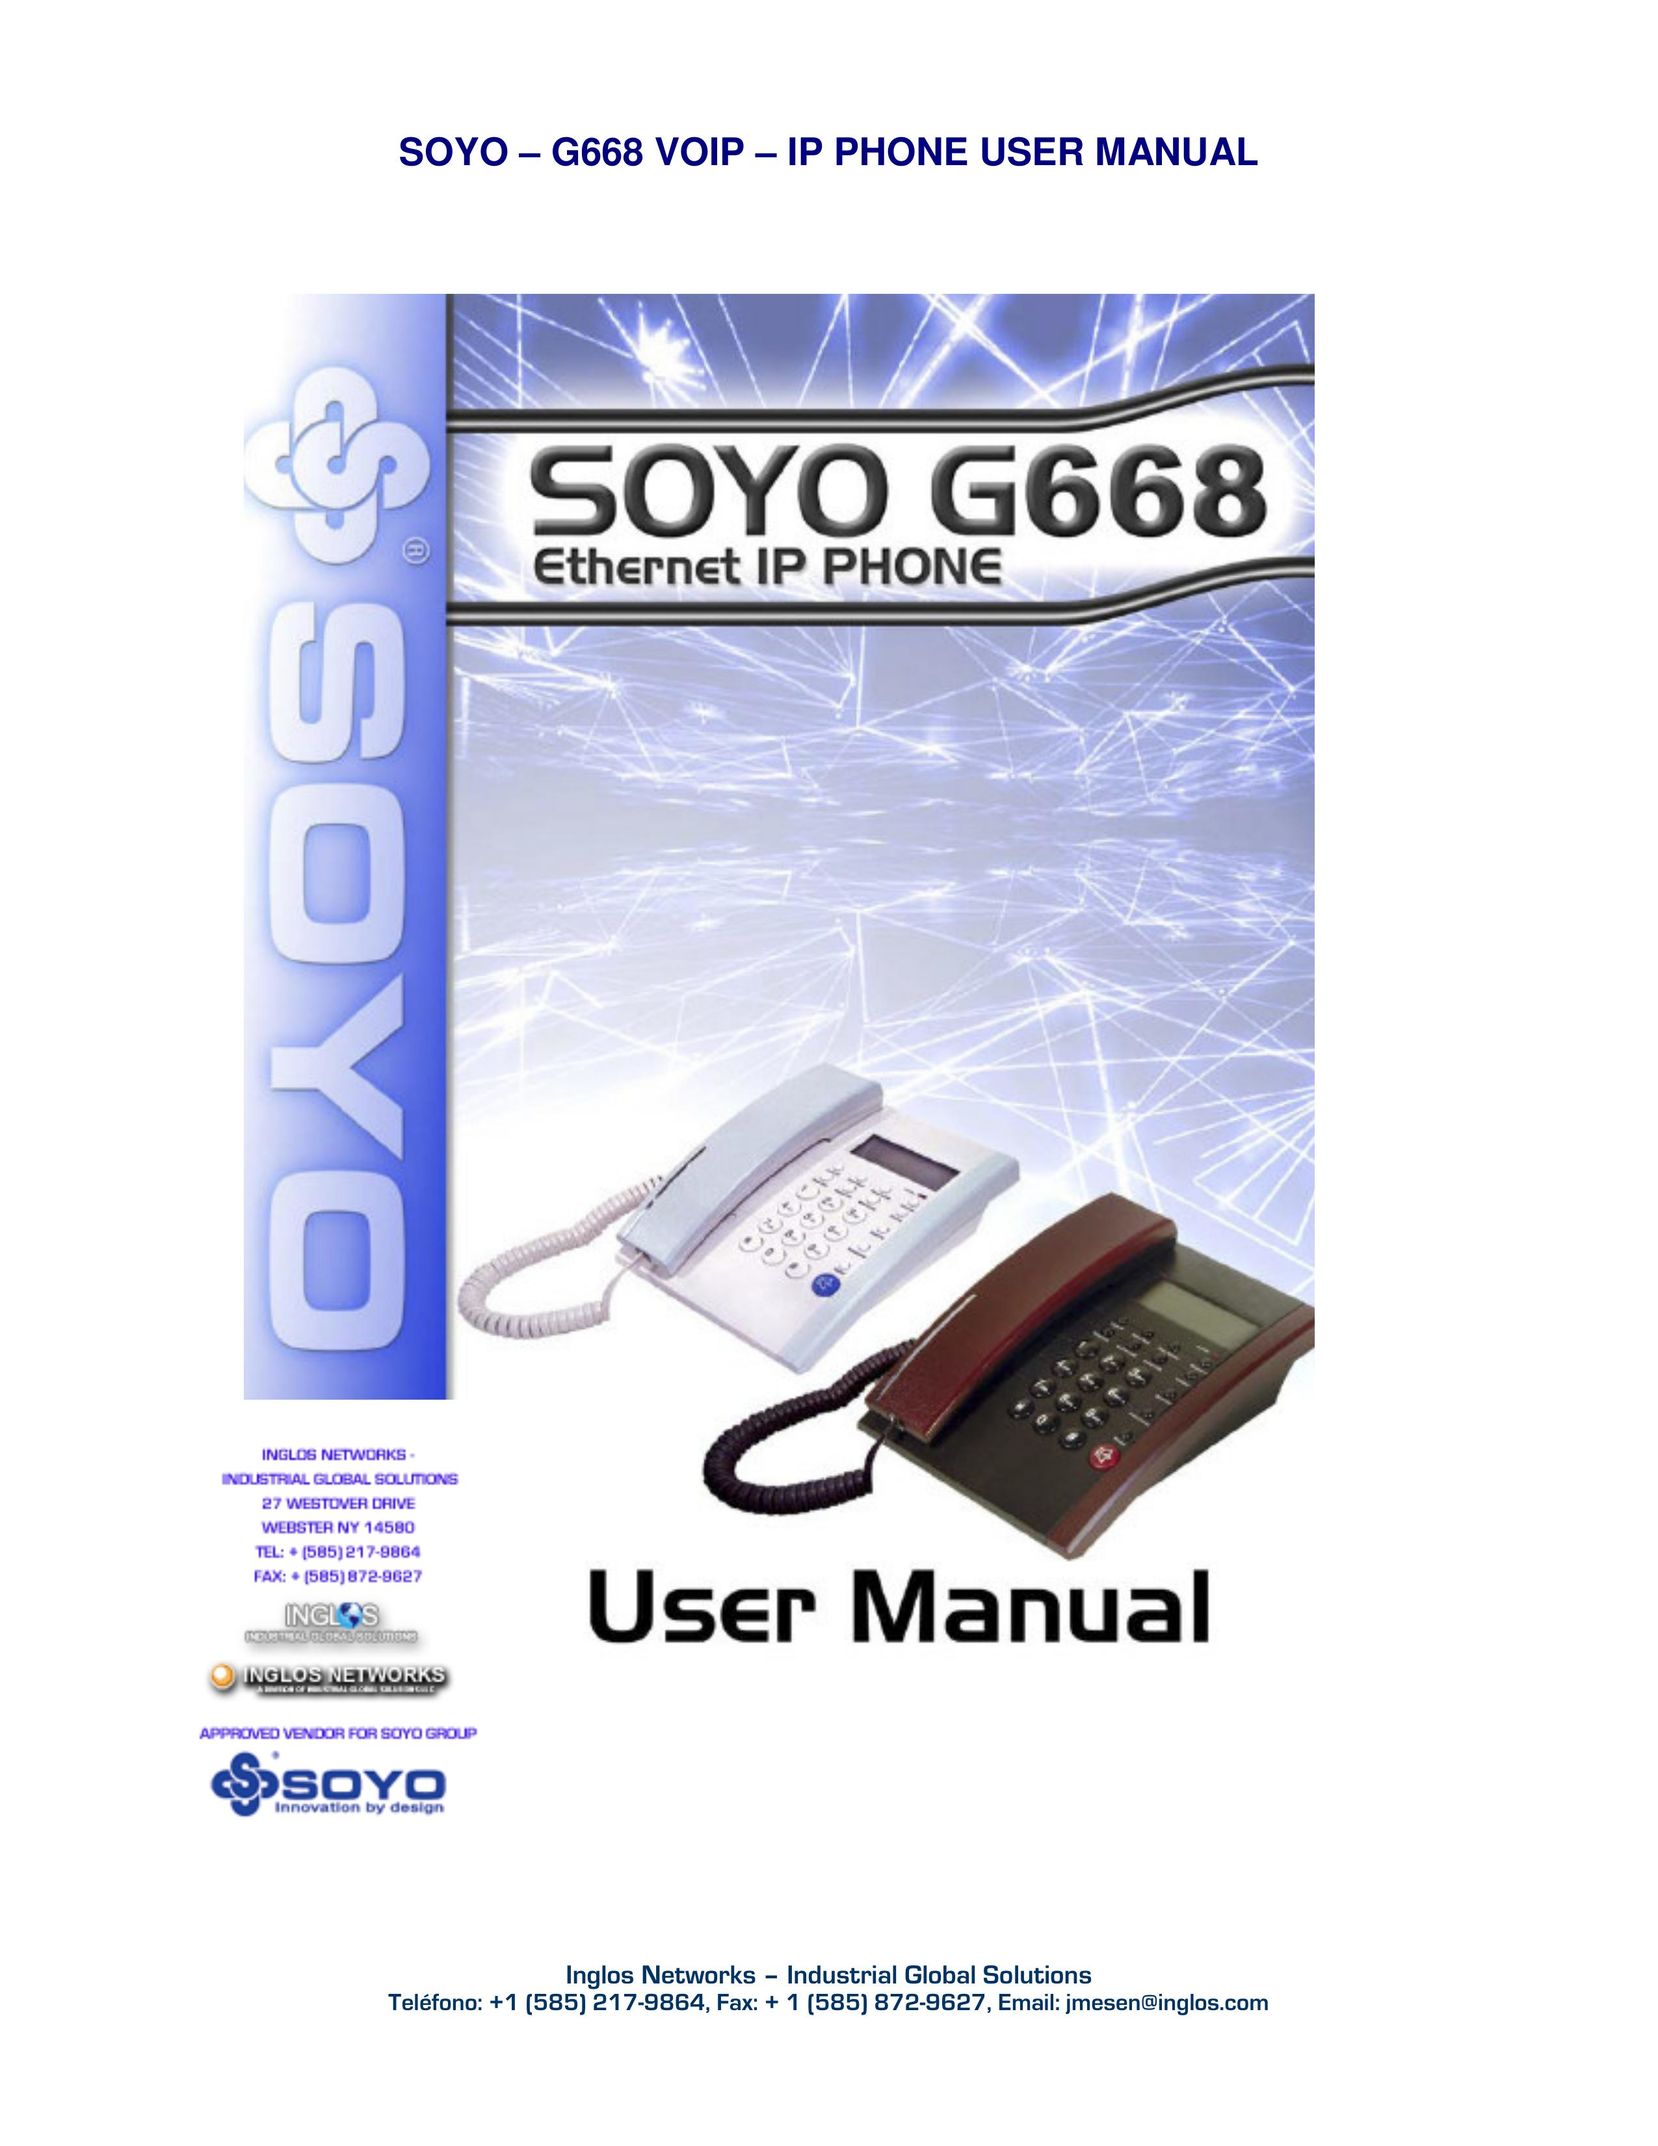 SOYO G668 Cordless Telephone User Manual